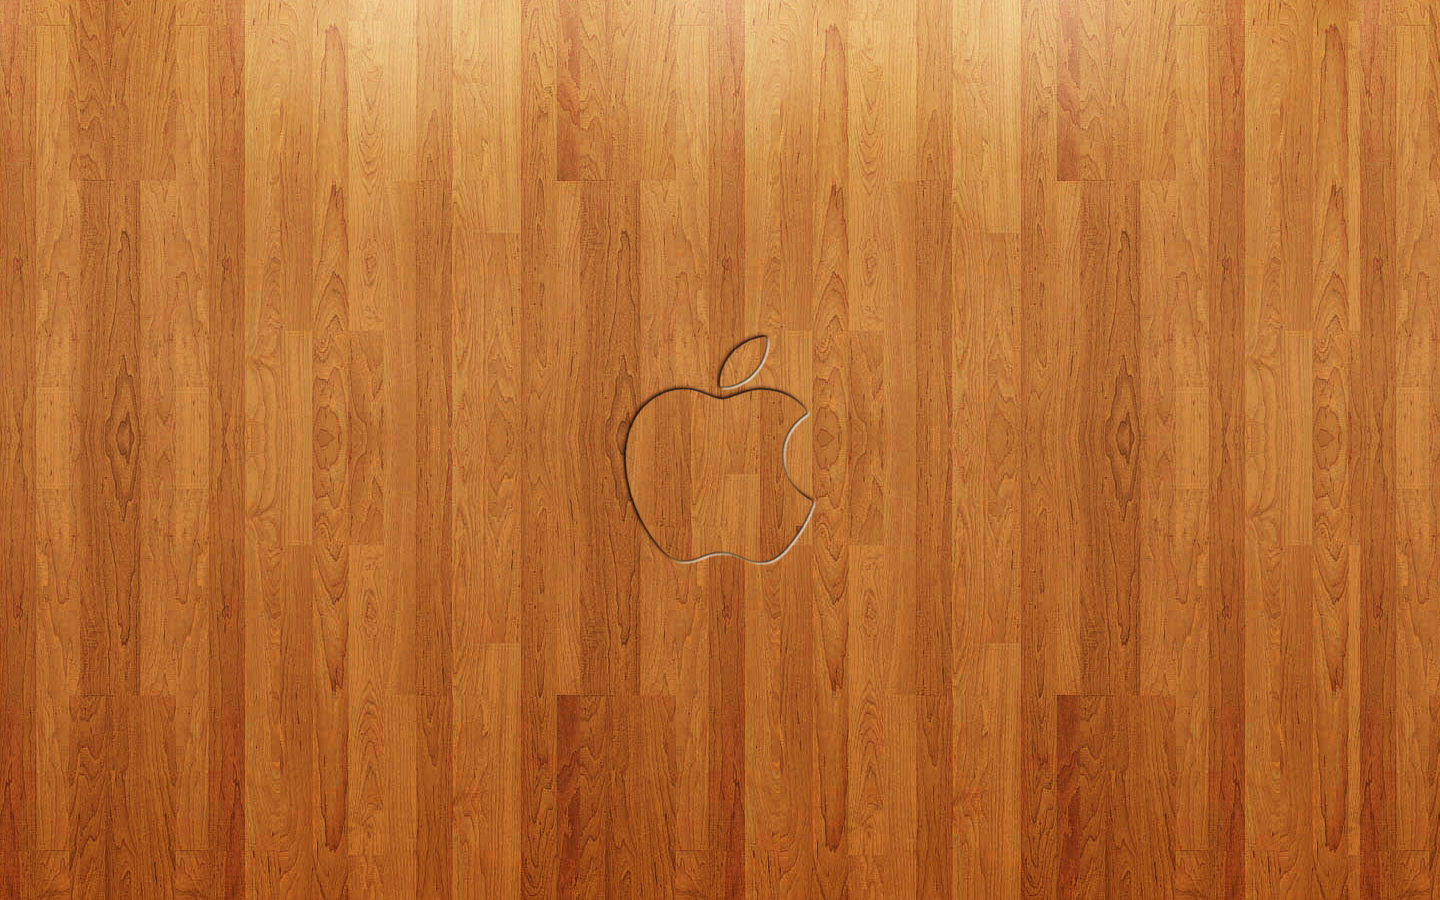 Wooden Logo Desktop Pc And Mac Wallpaper